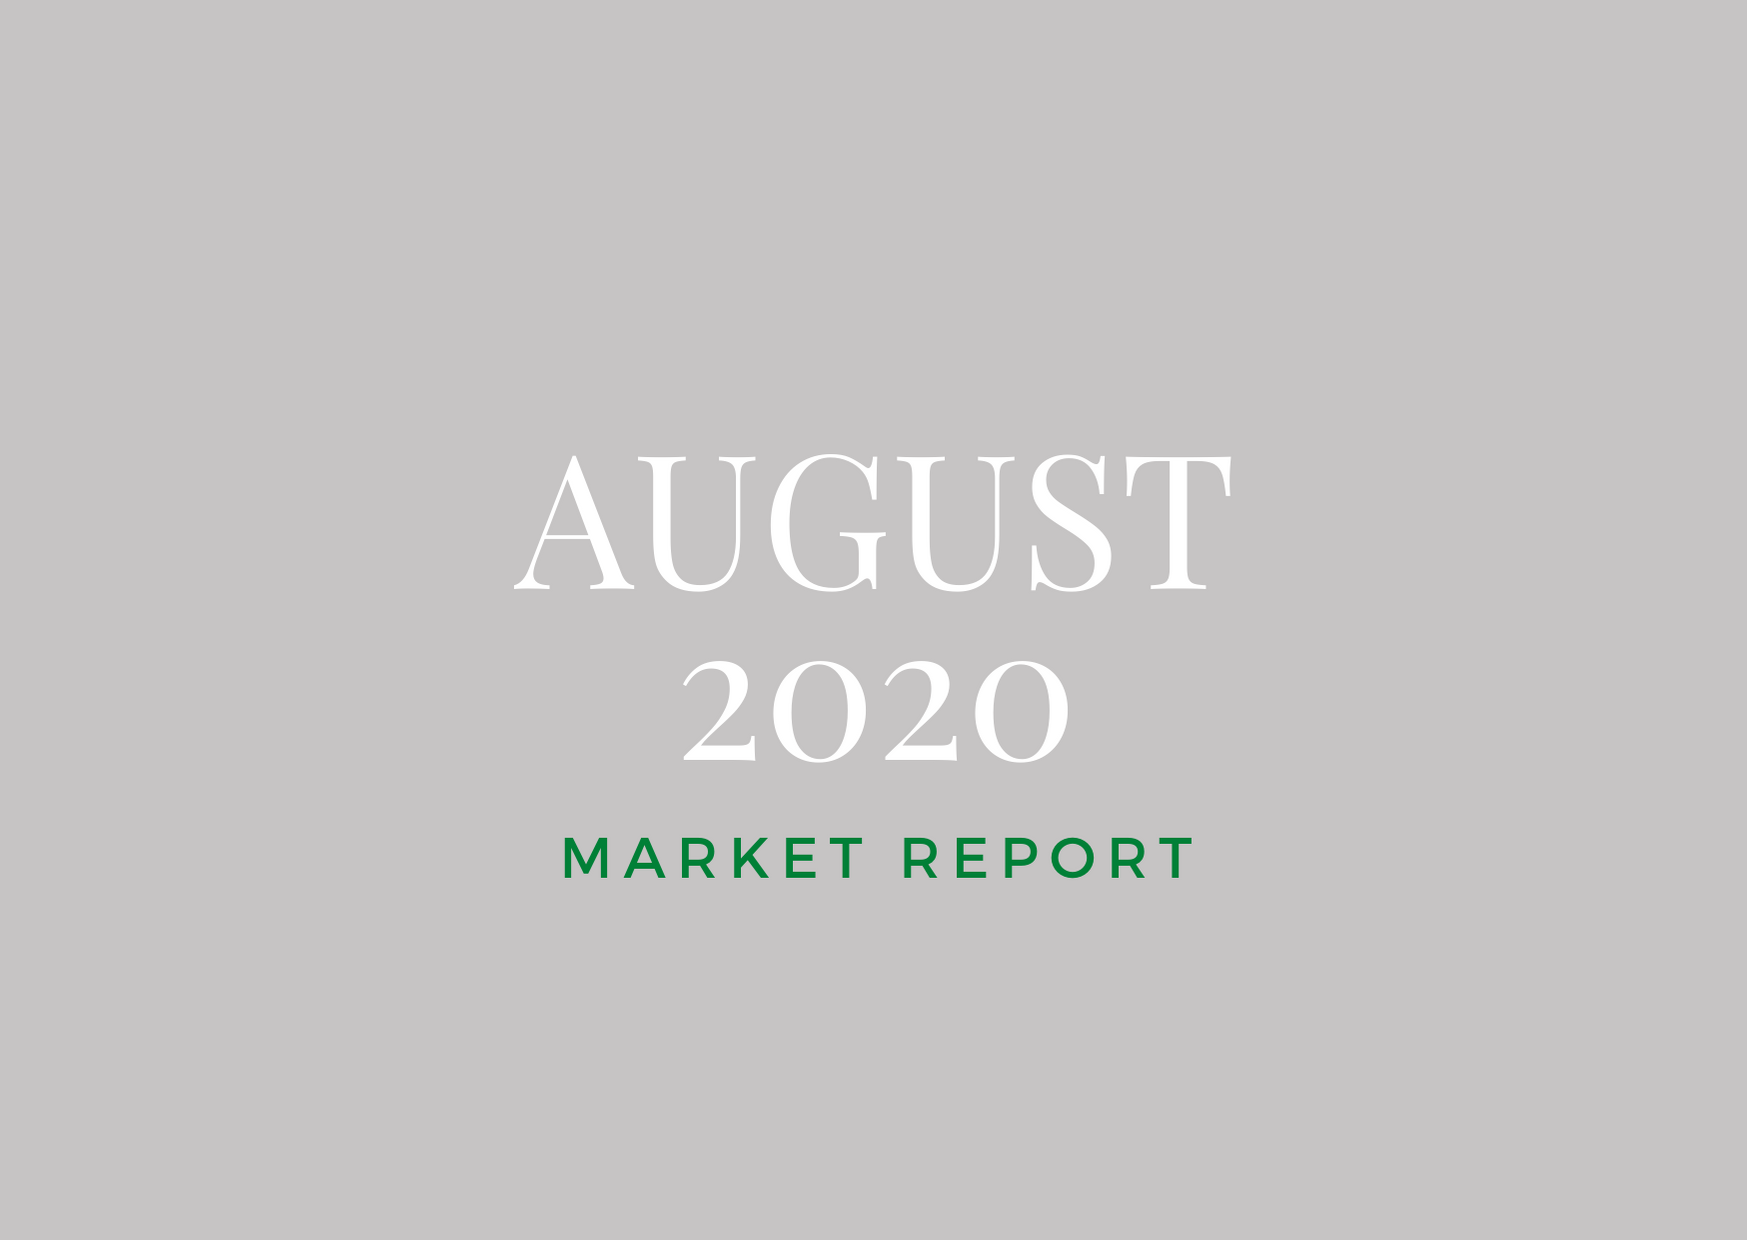 August 2020 Market Report